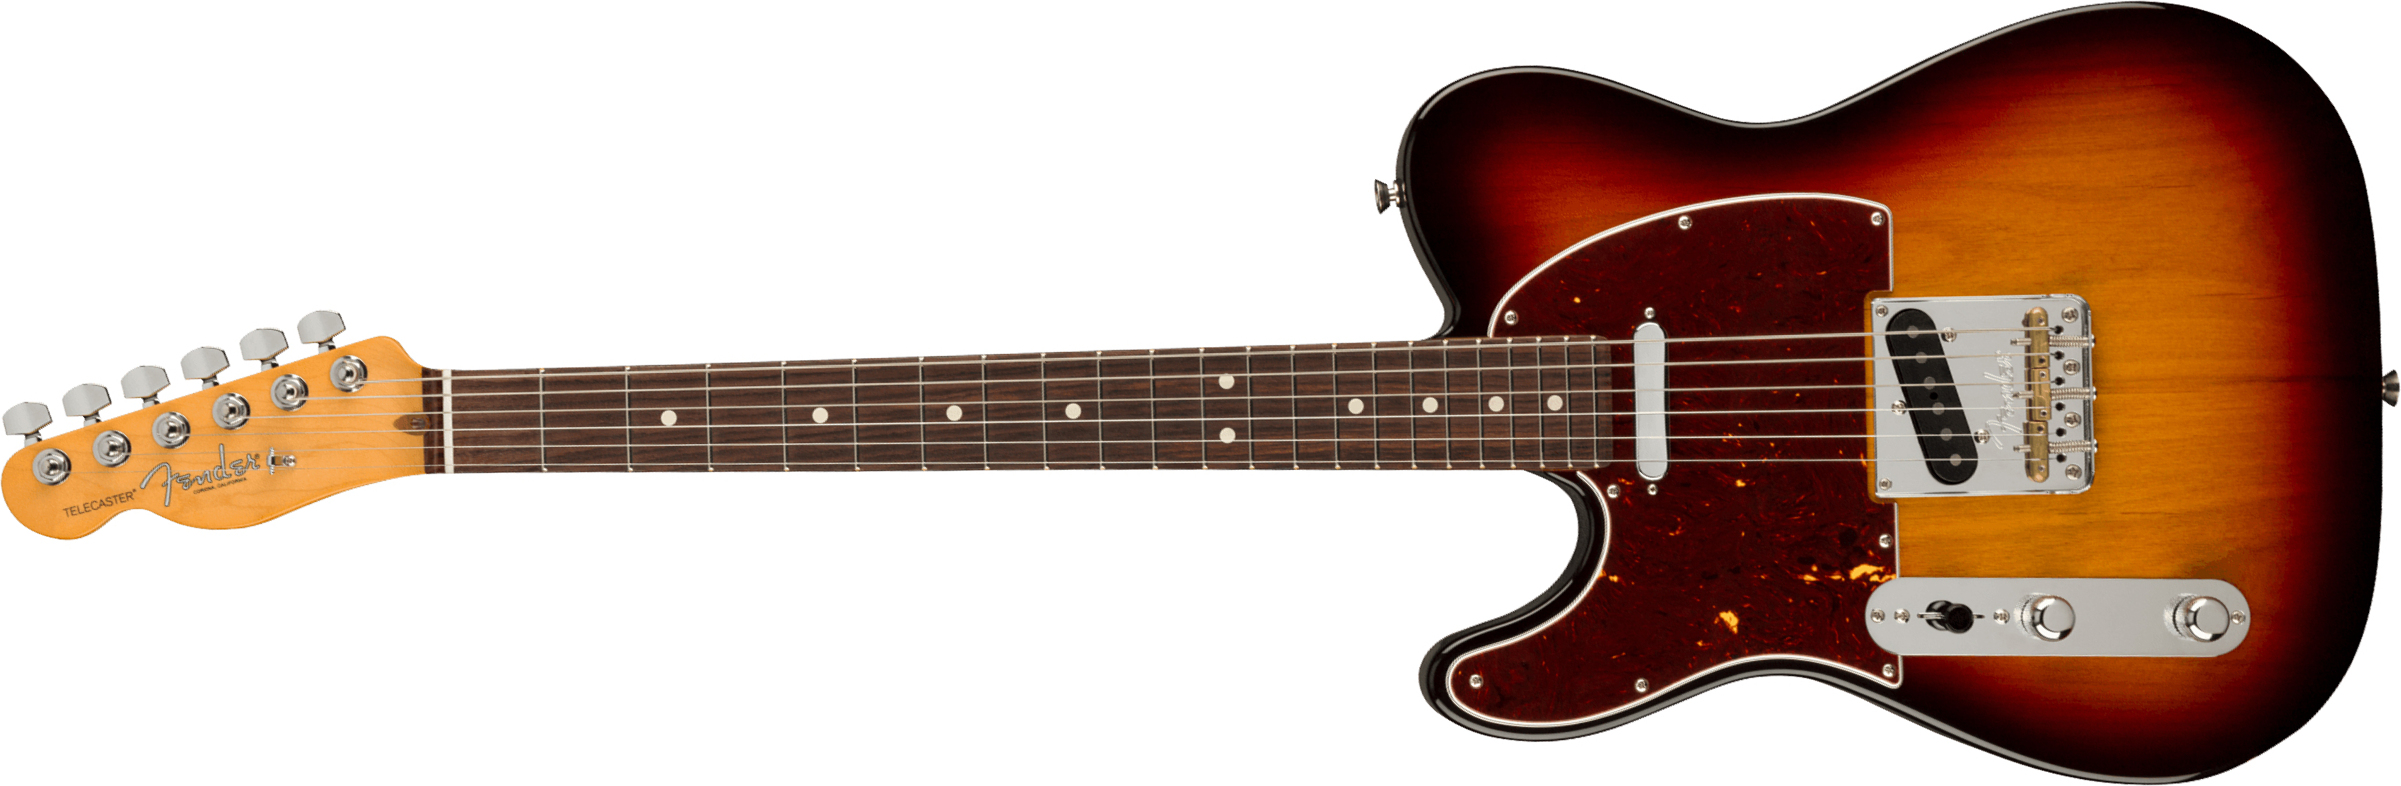 Fender Tele American Professional Ii Lh Gaucher Usa Rw - 3-color Sunburst - Left-handed electric guitar - Main picture